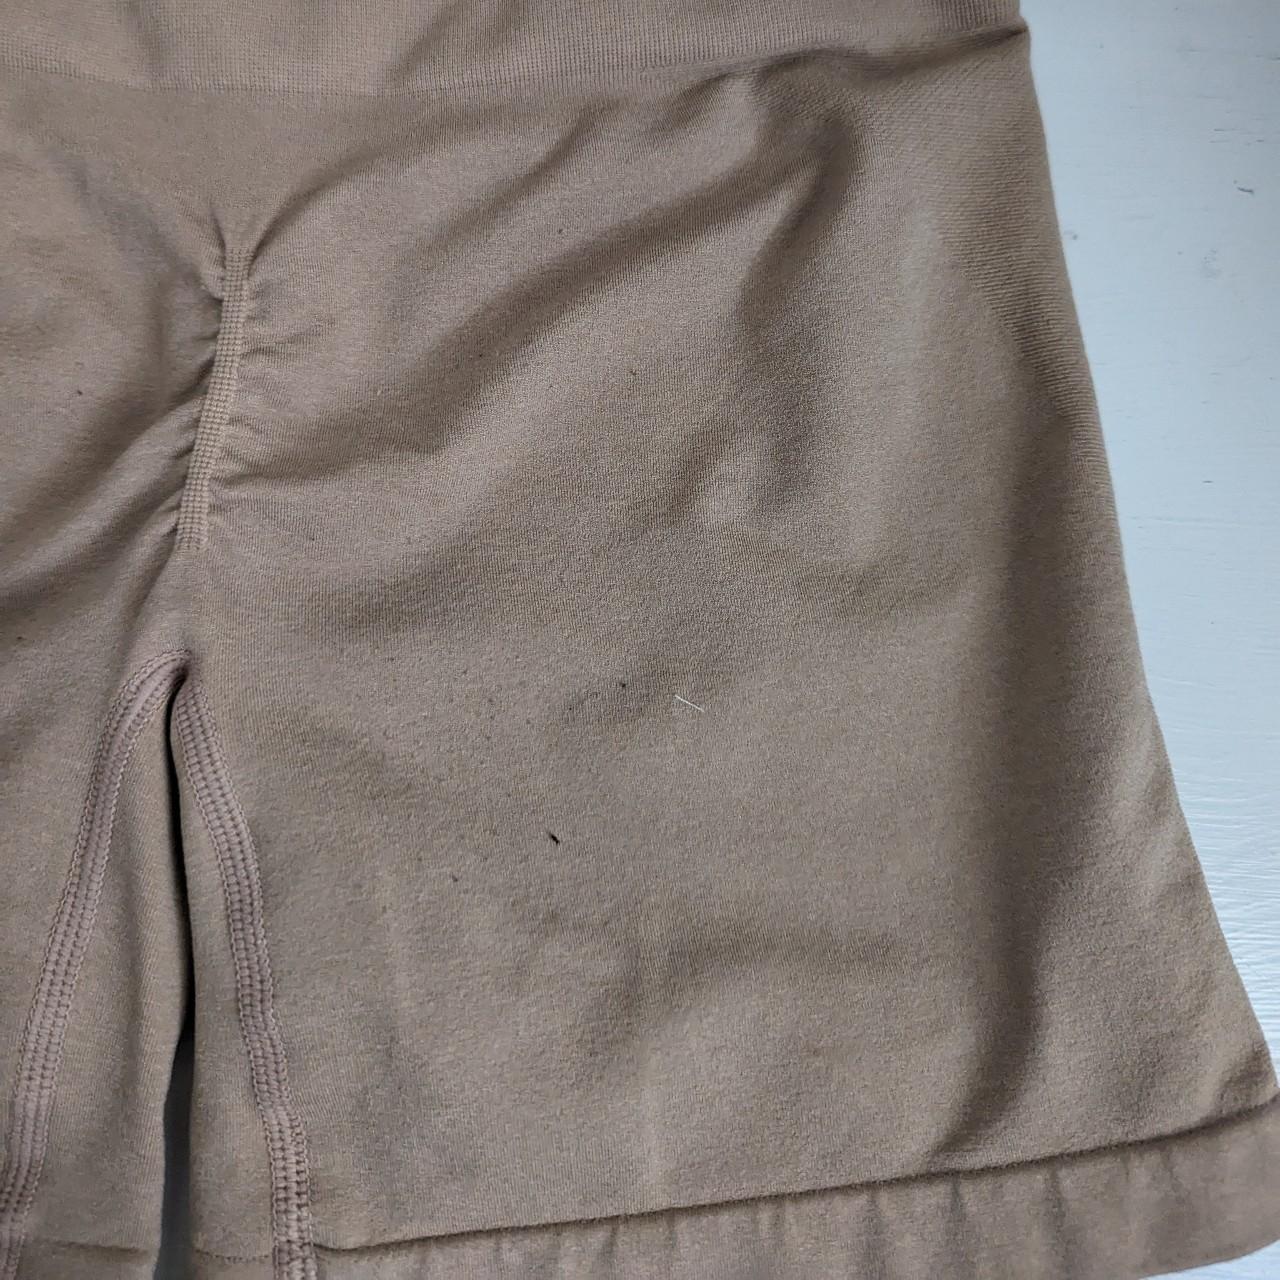 Orange Aurola shorts size small, worn once🧡 just - Depop